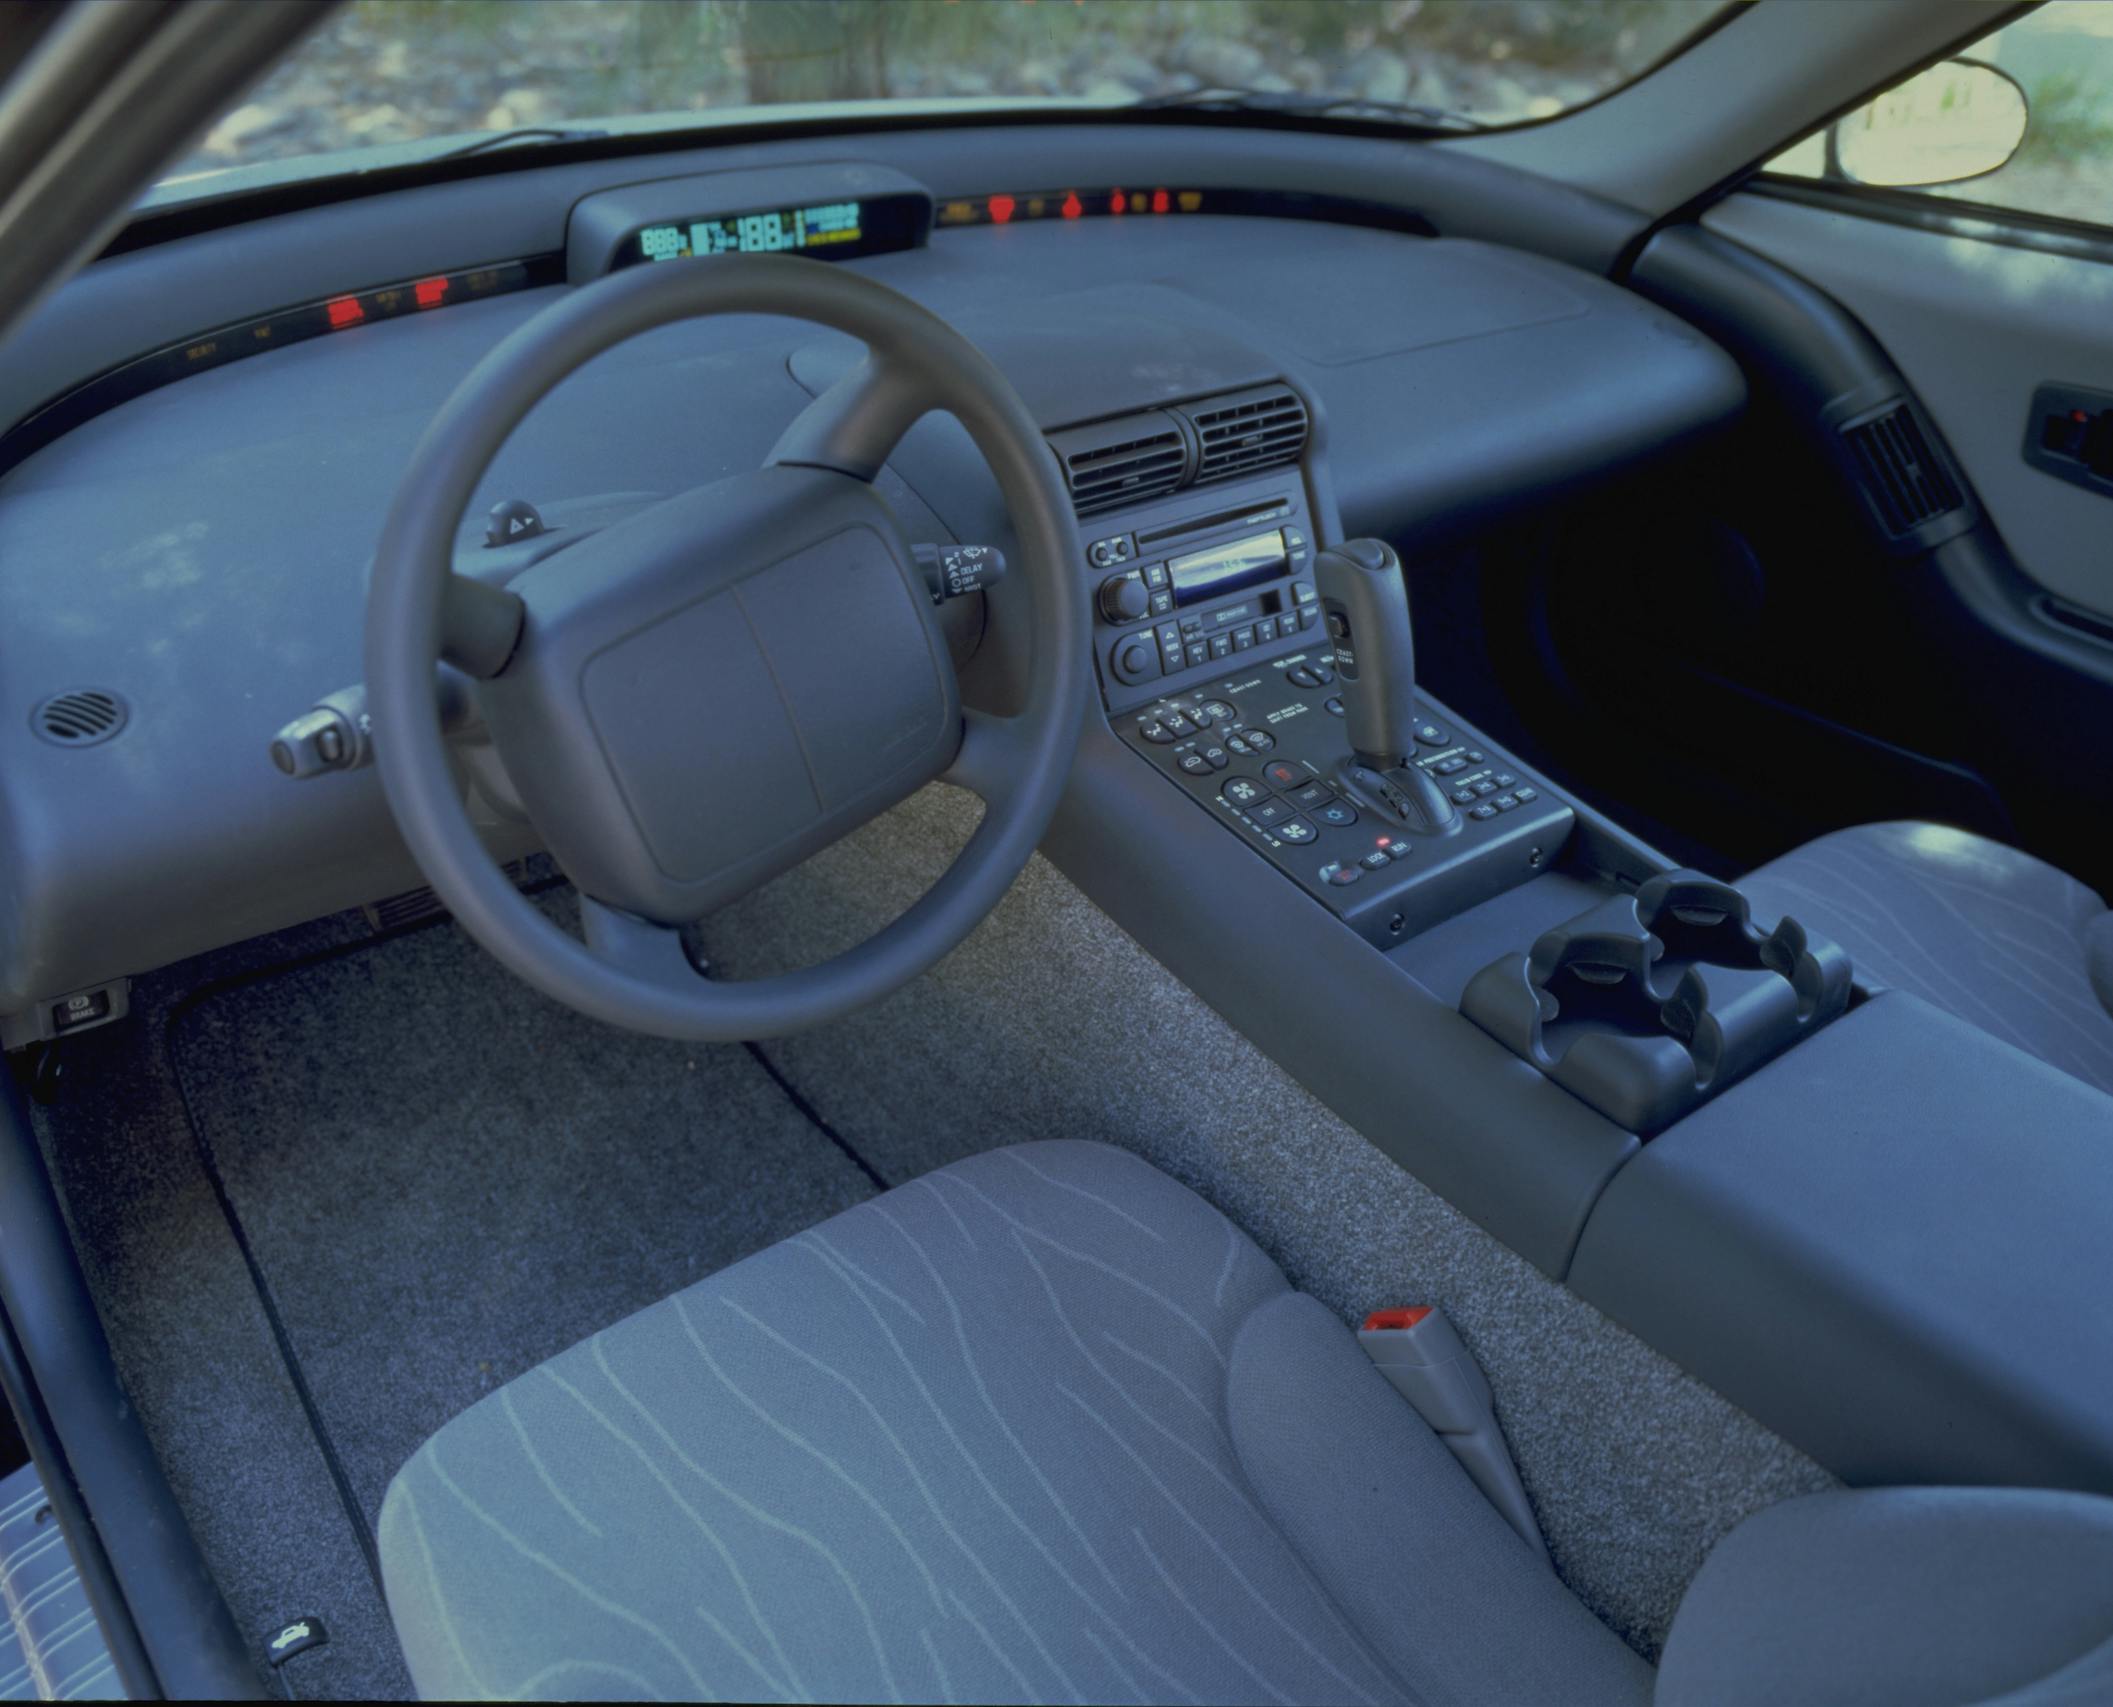 EV1 early GM electric car interior